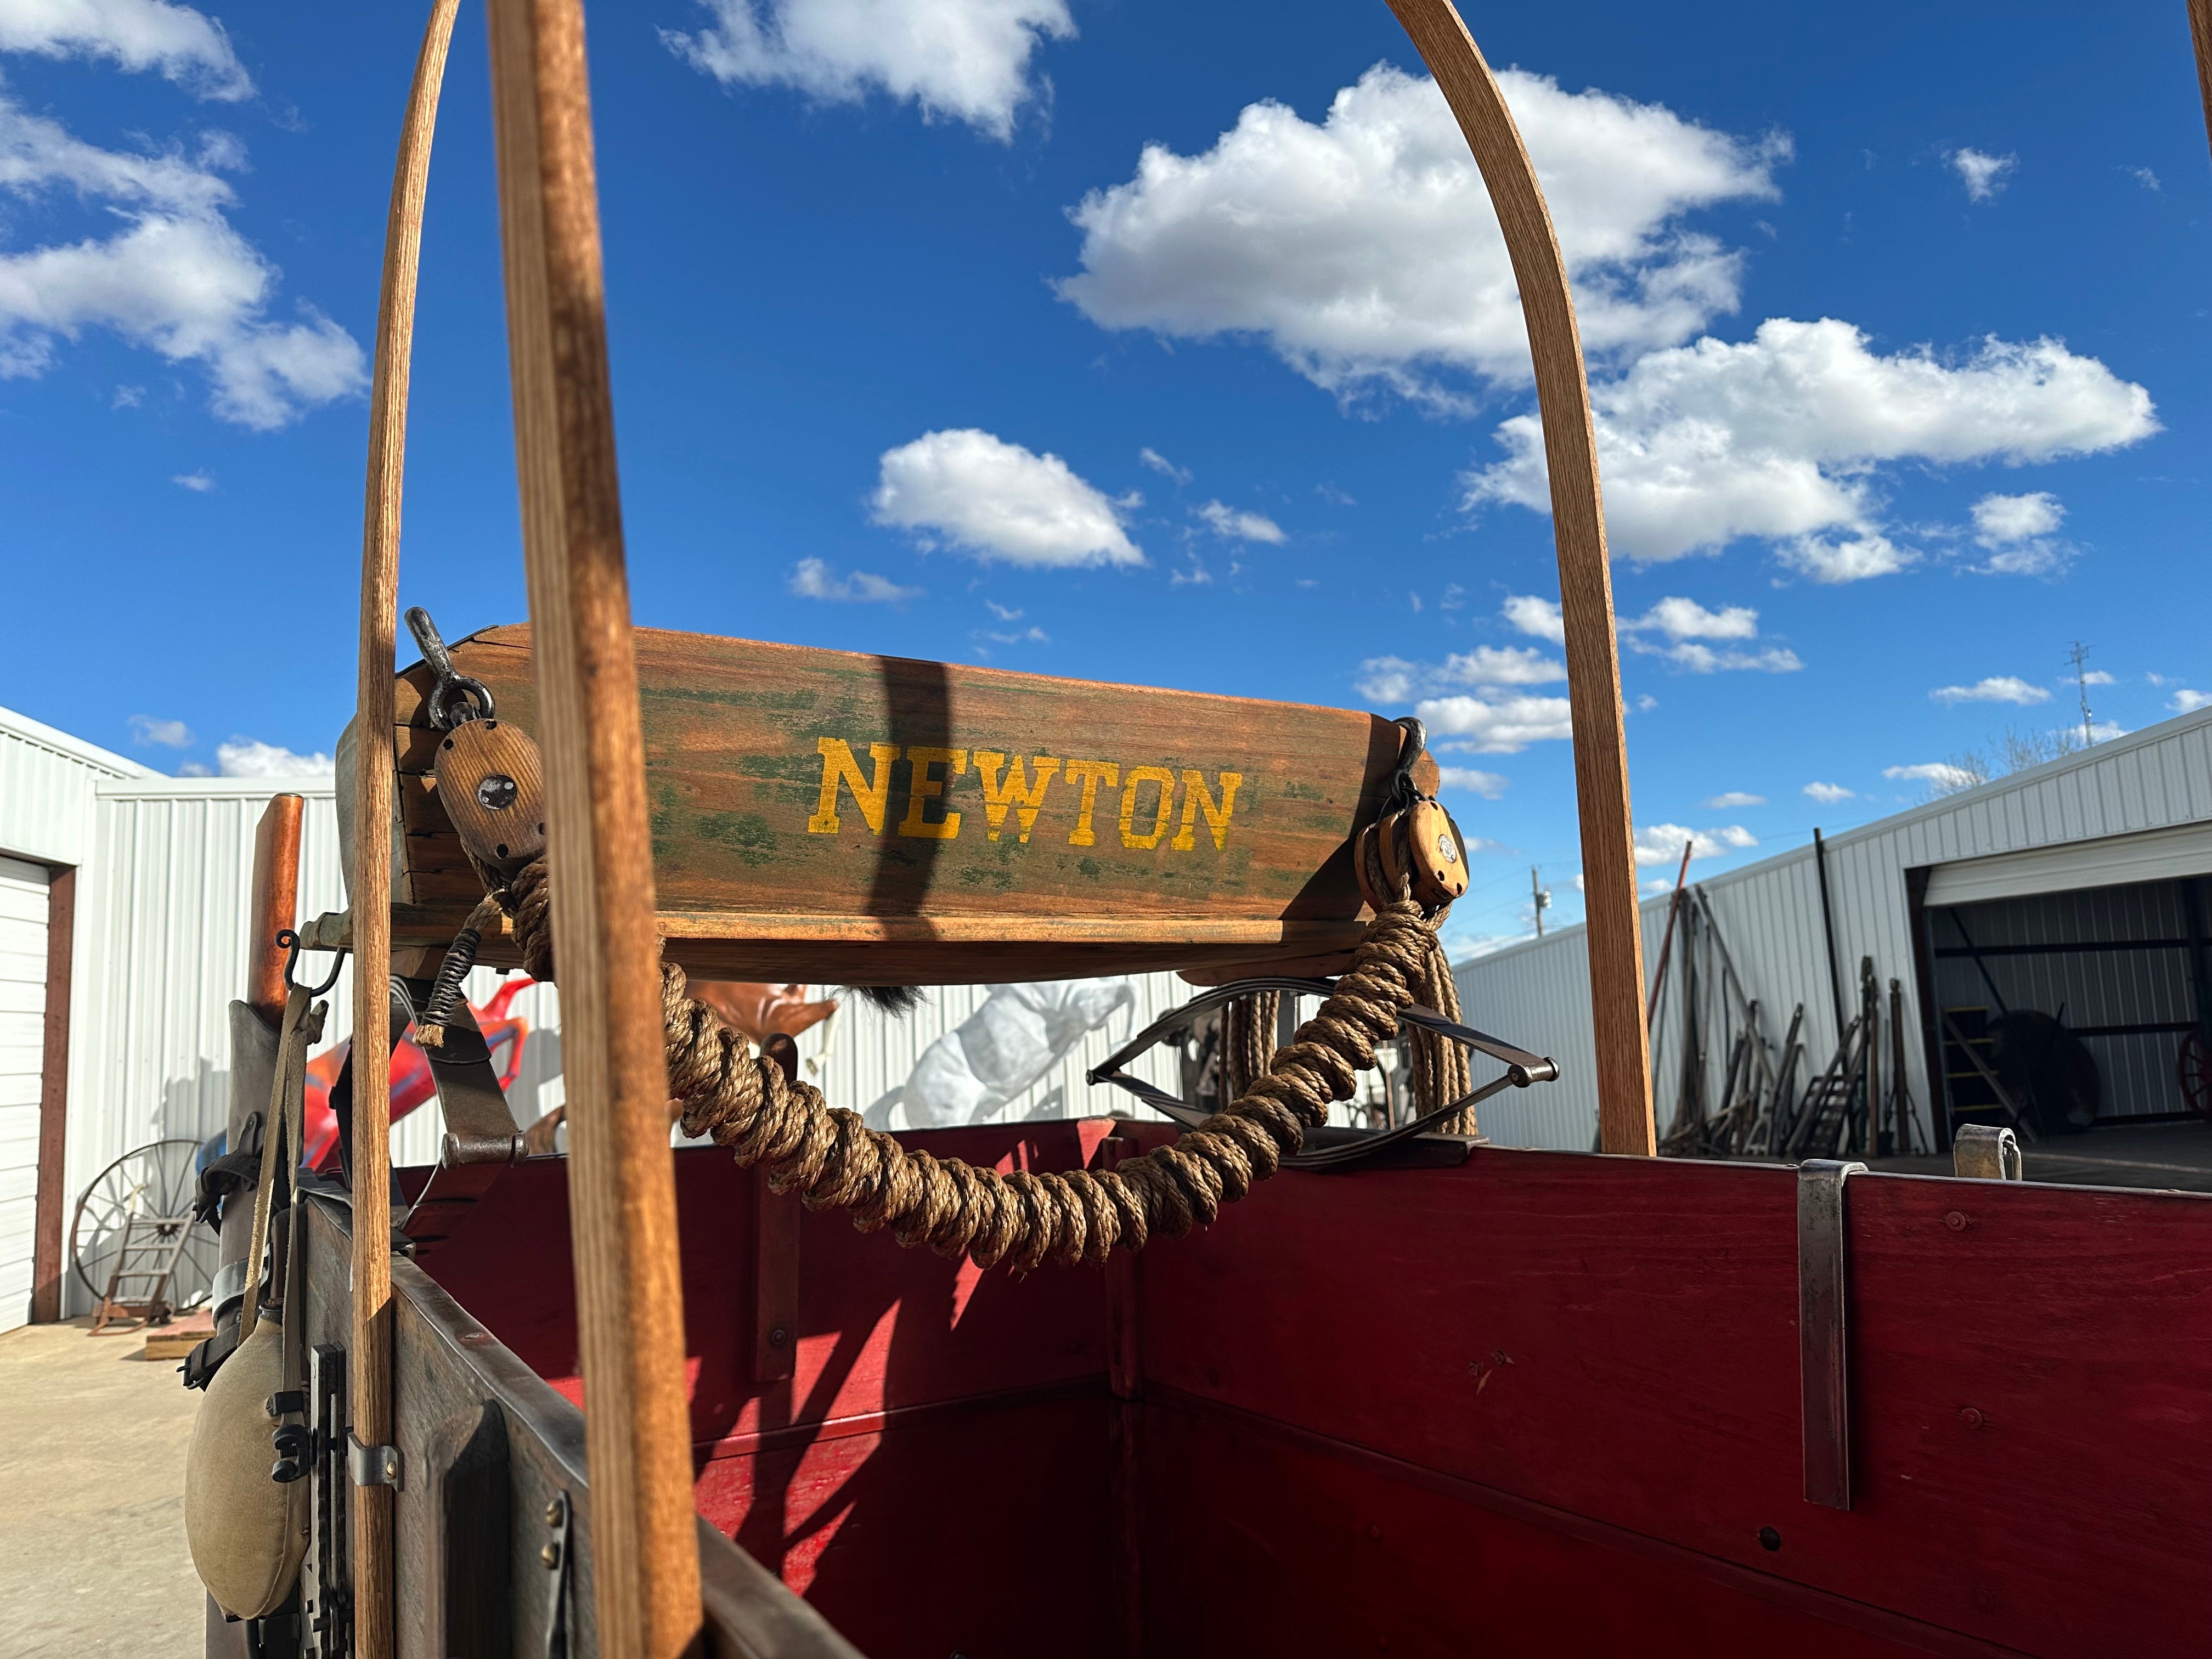 Newton Chuck Wagon